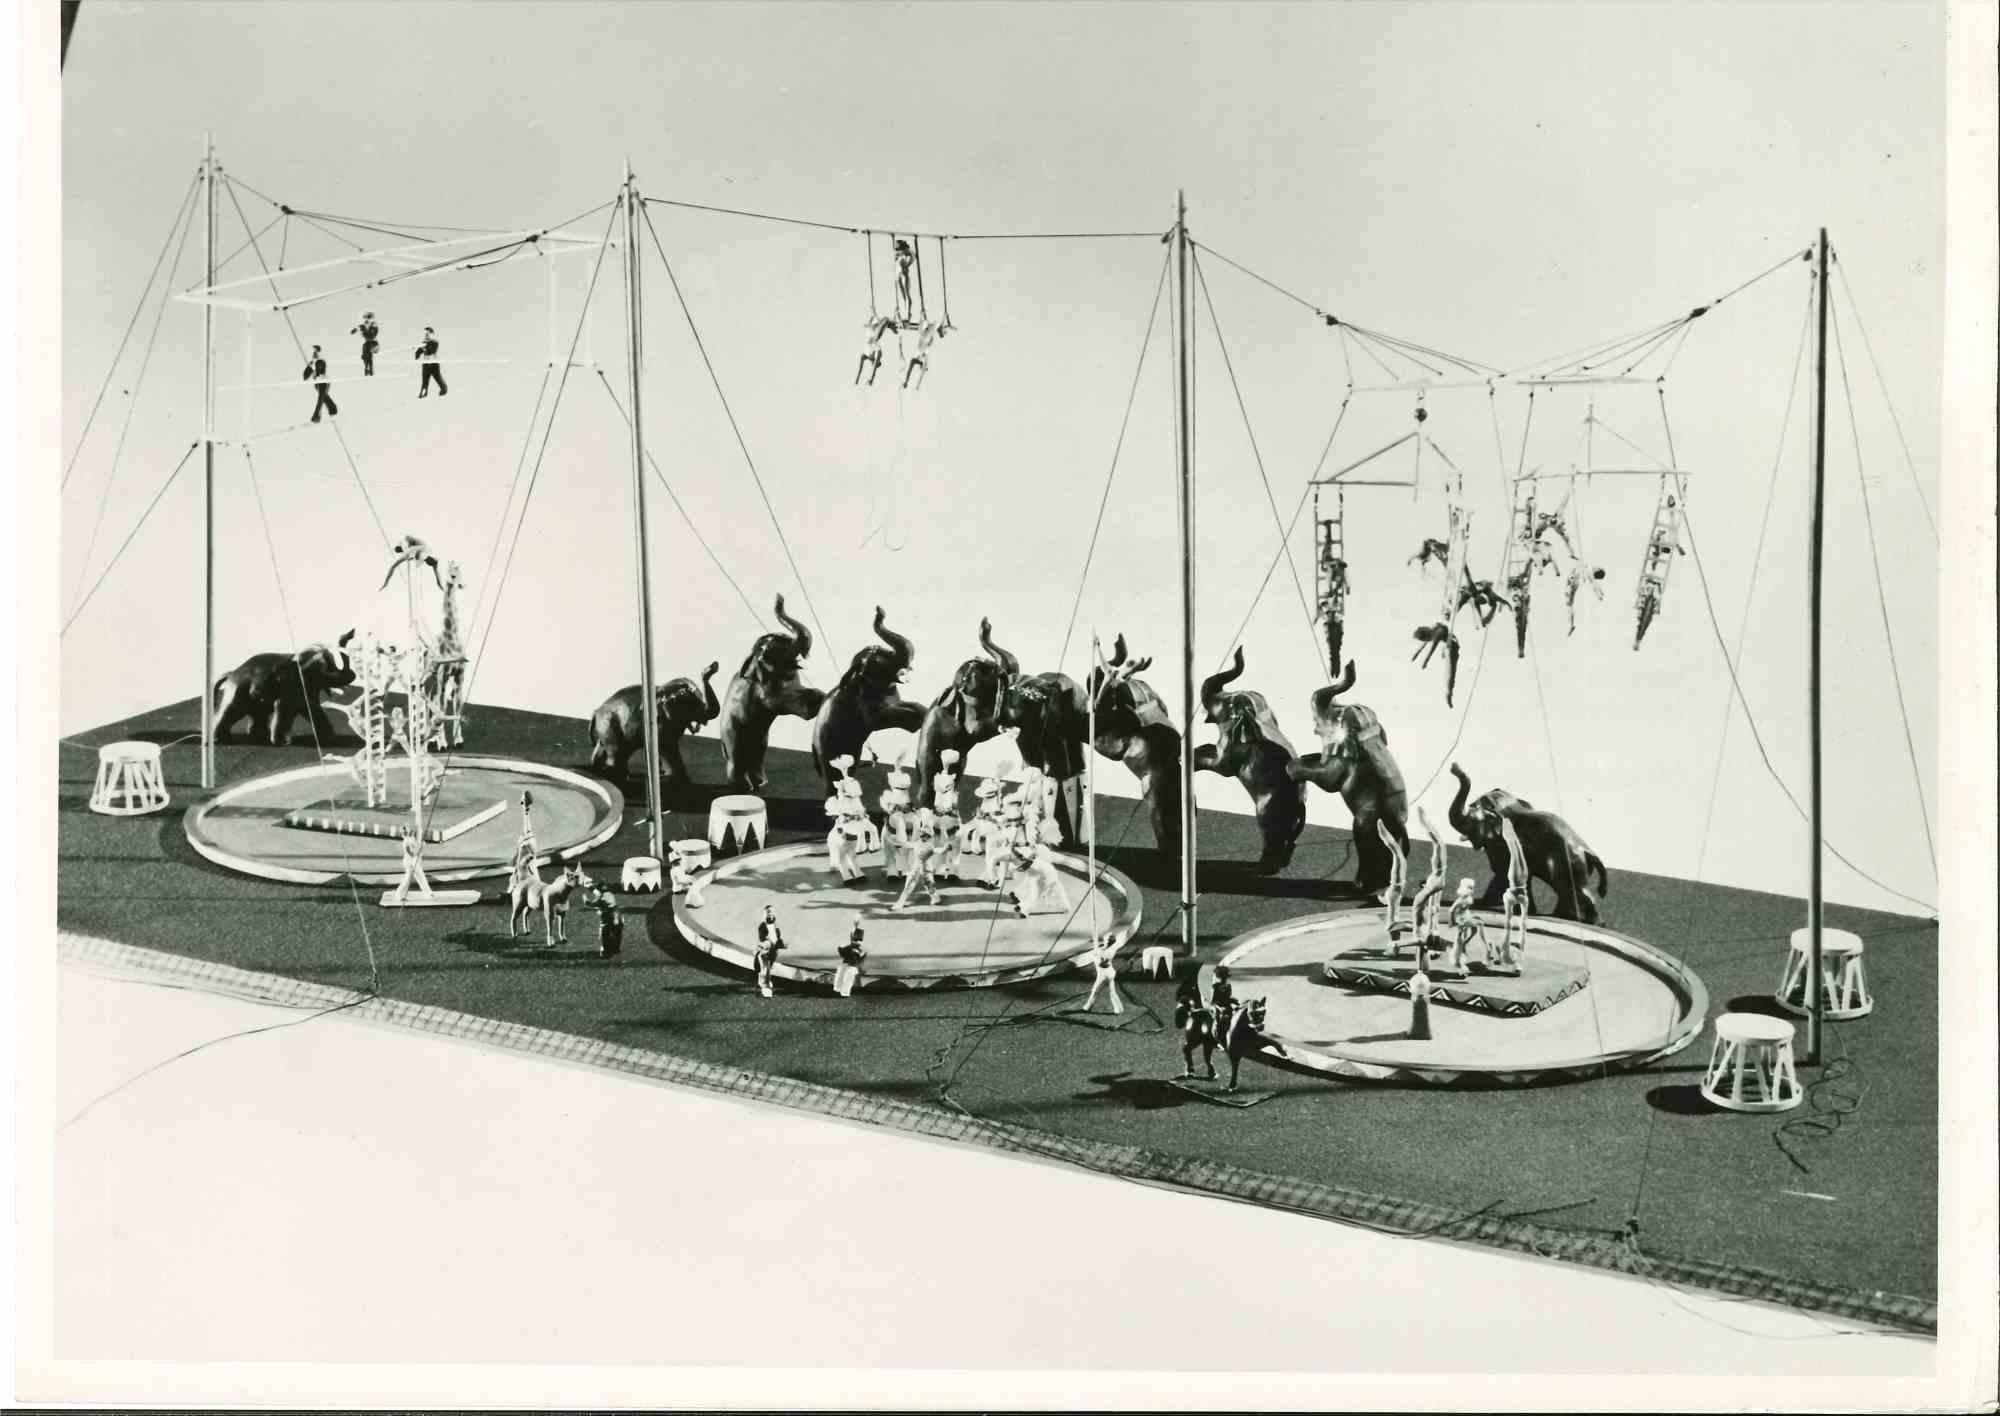 Unknown Figurative Photograph - Model Circus Building Recaptures the Past - Vintage Photograph -Mid 20th Century